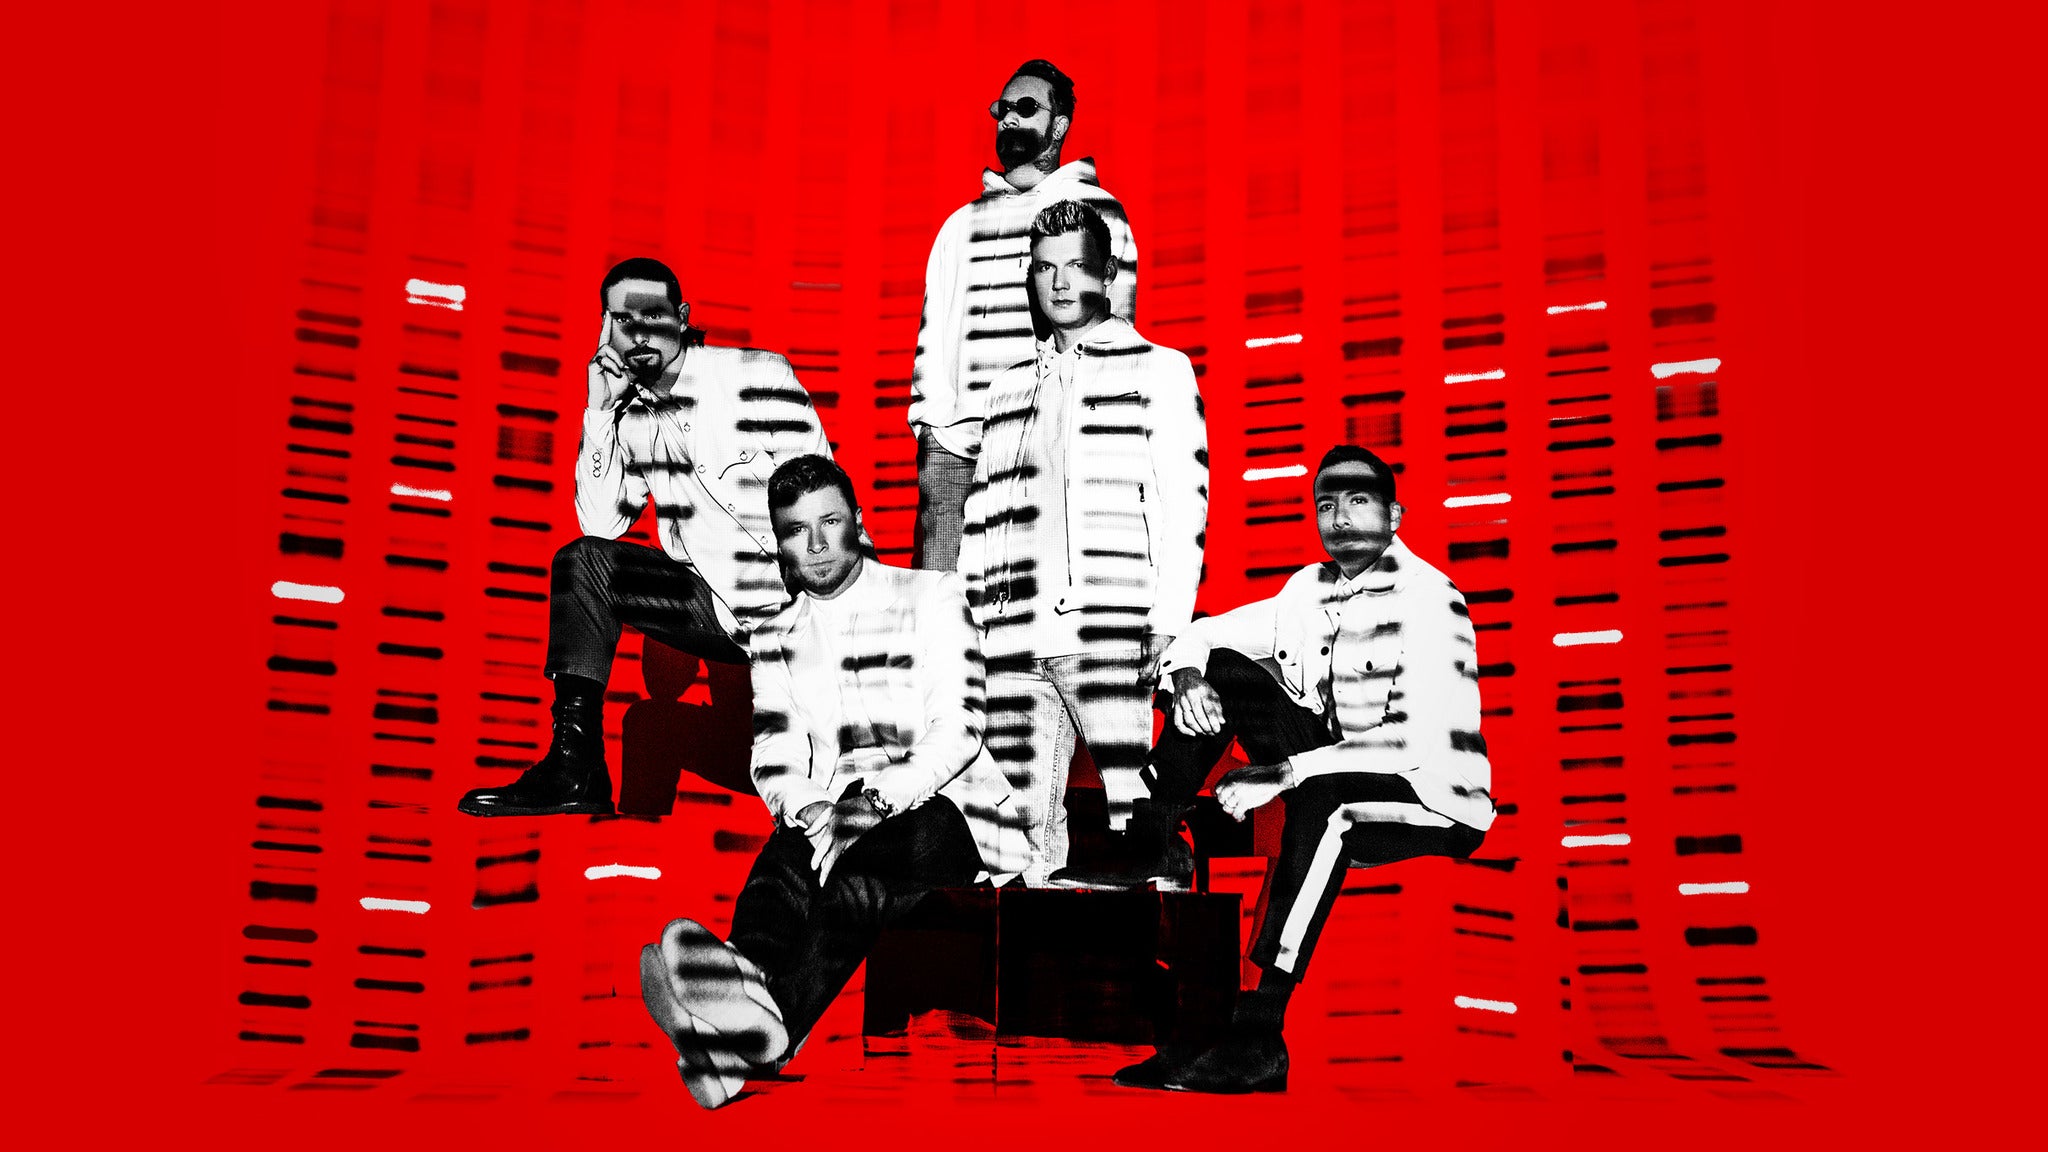 Backstreet Boys: DNA World Tour in Las Vegas promo photo for Live Nation presale offer code